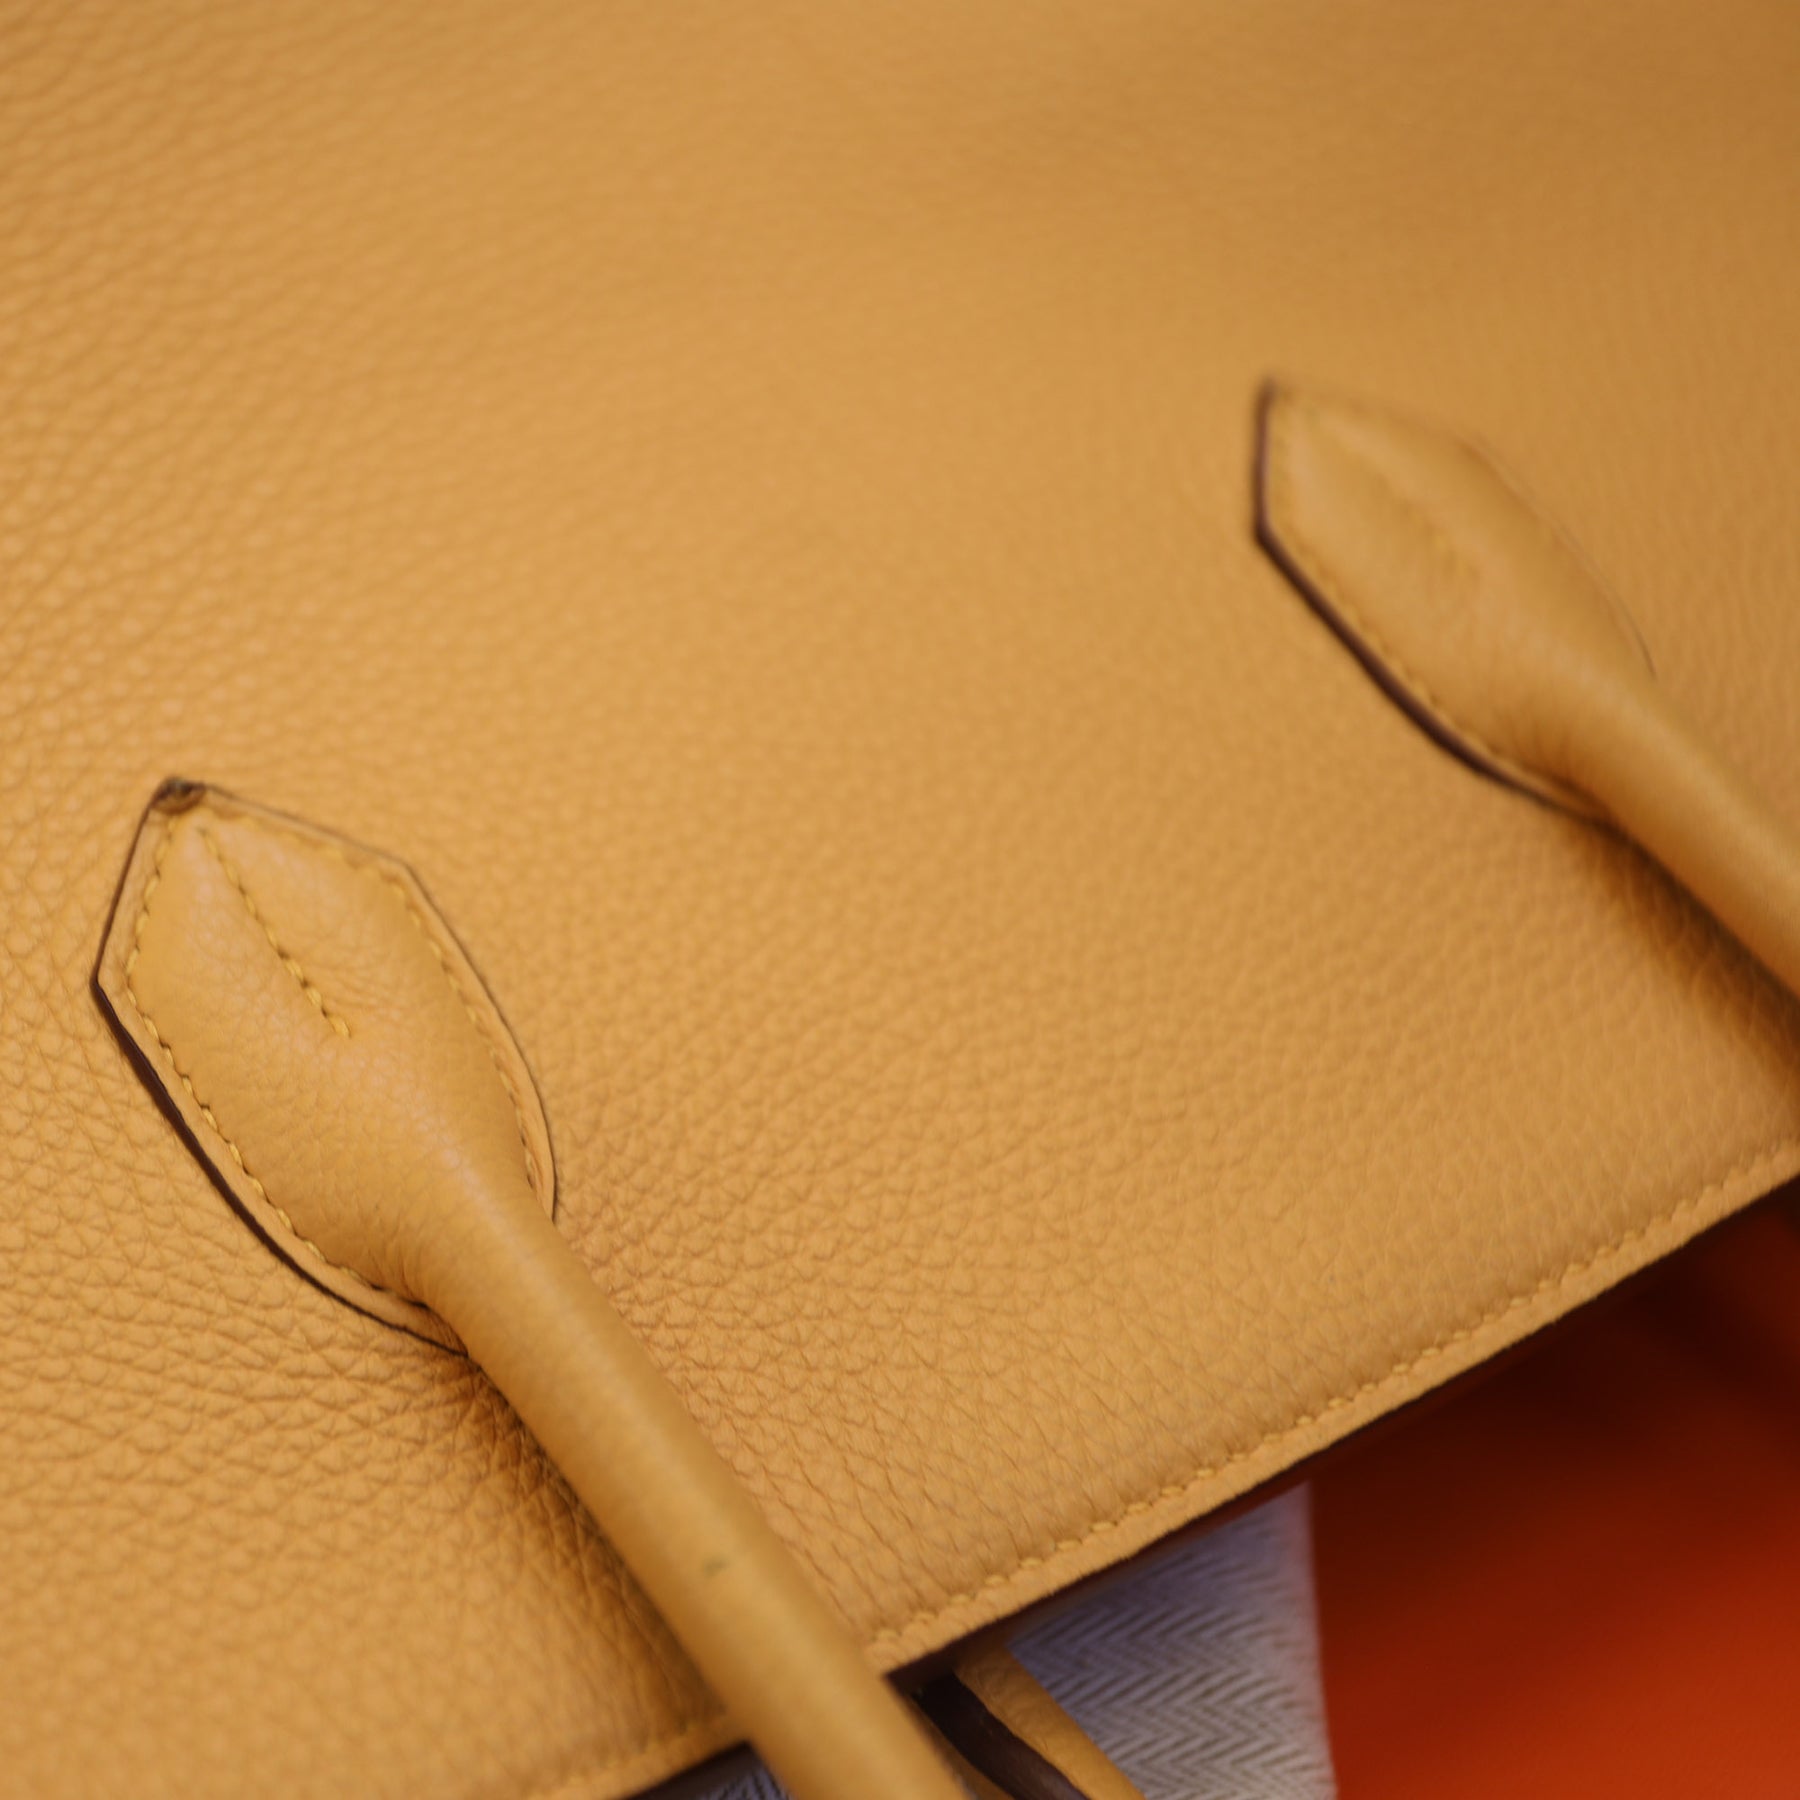 Hermès Stunning Hermes Birkin handbag 40 cm white togo leather